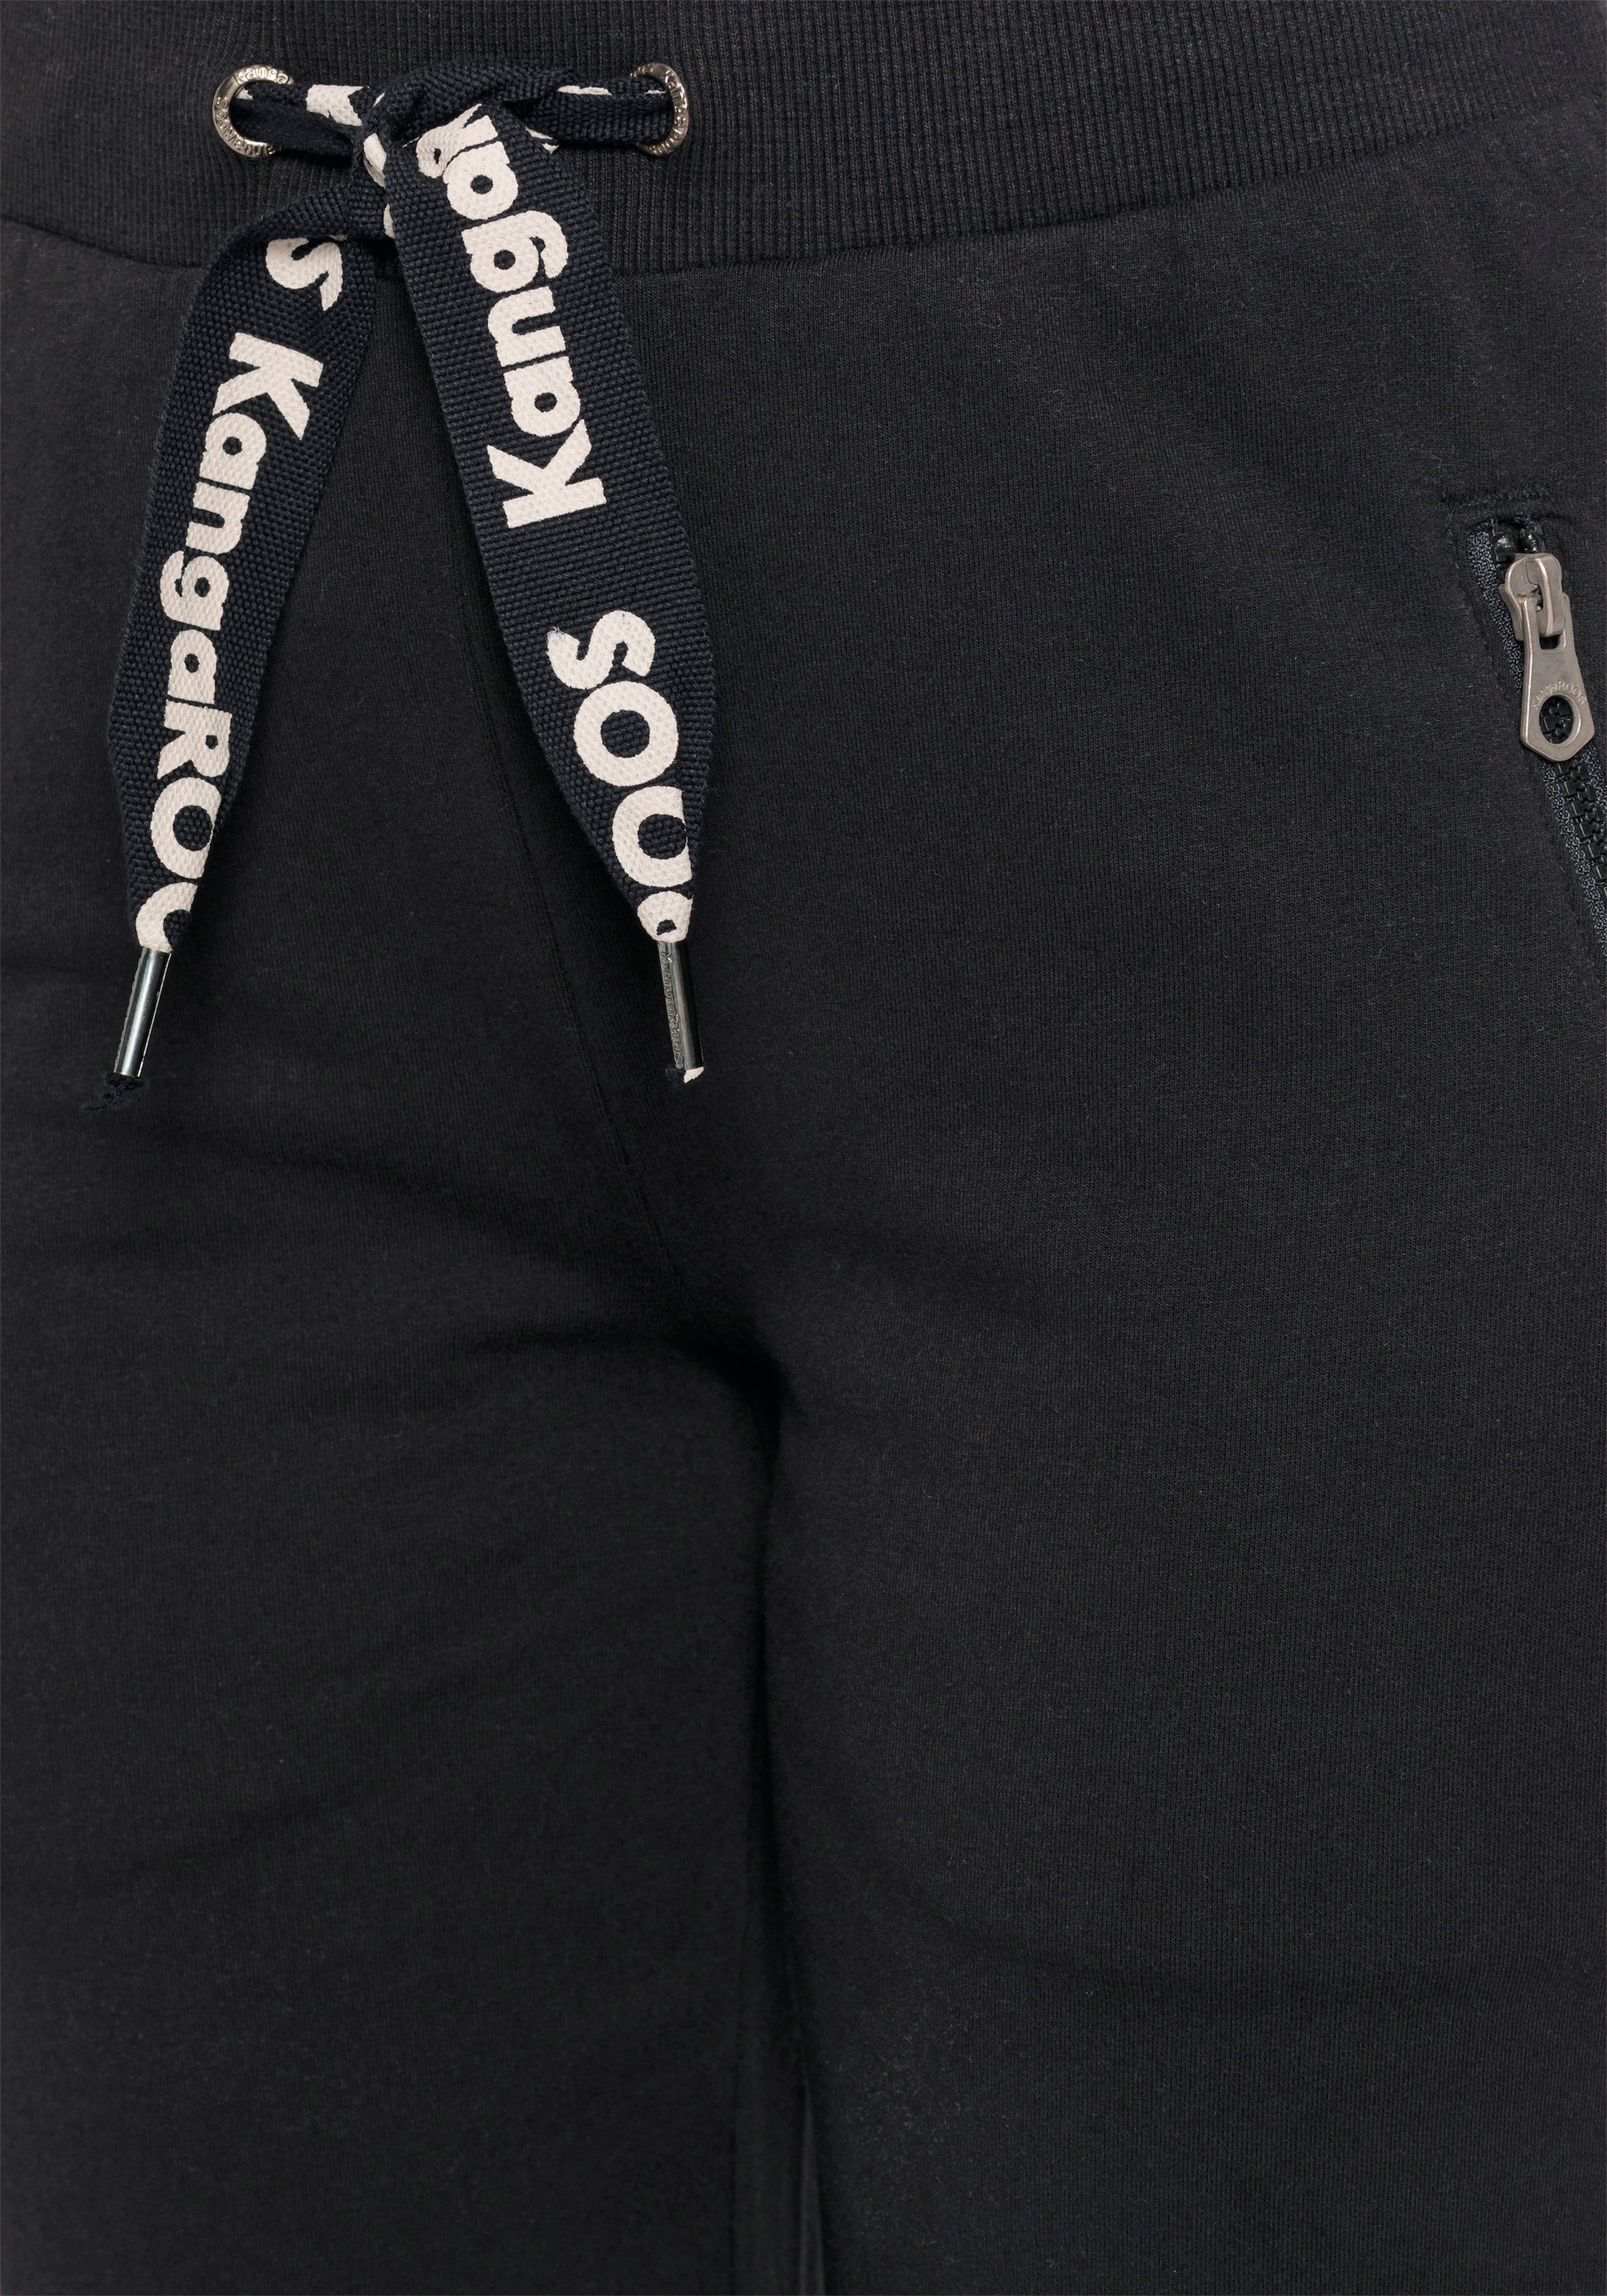 und Logo Pants, Sweatpants Zippertaschen String KOLLEKTION -NEUE Jogger bestellen mit KangaROOS